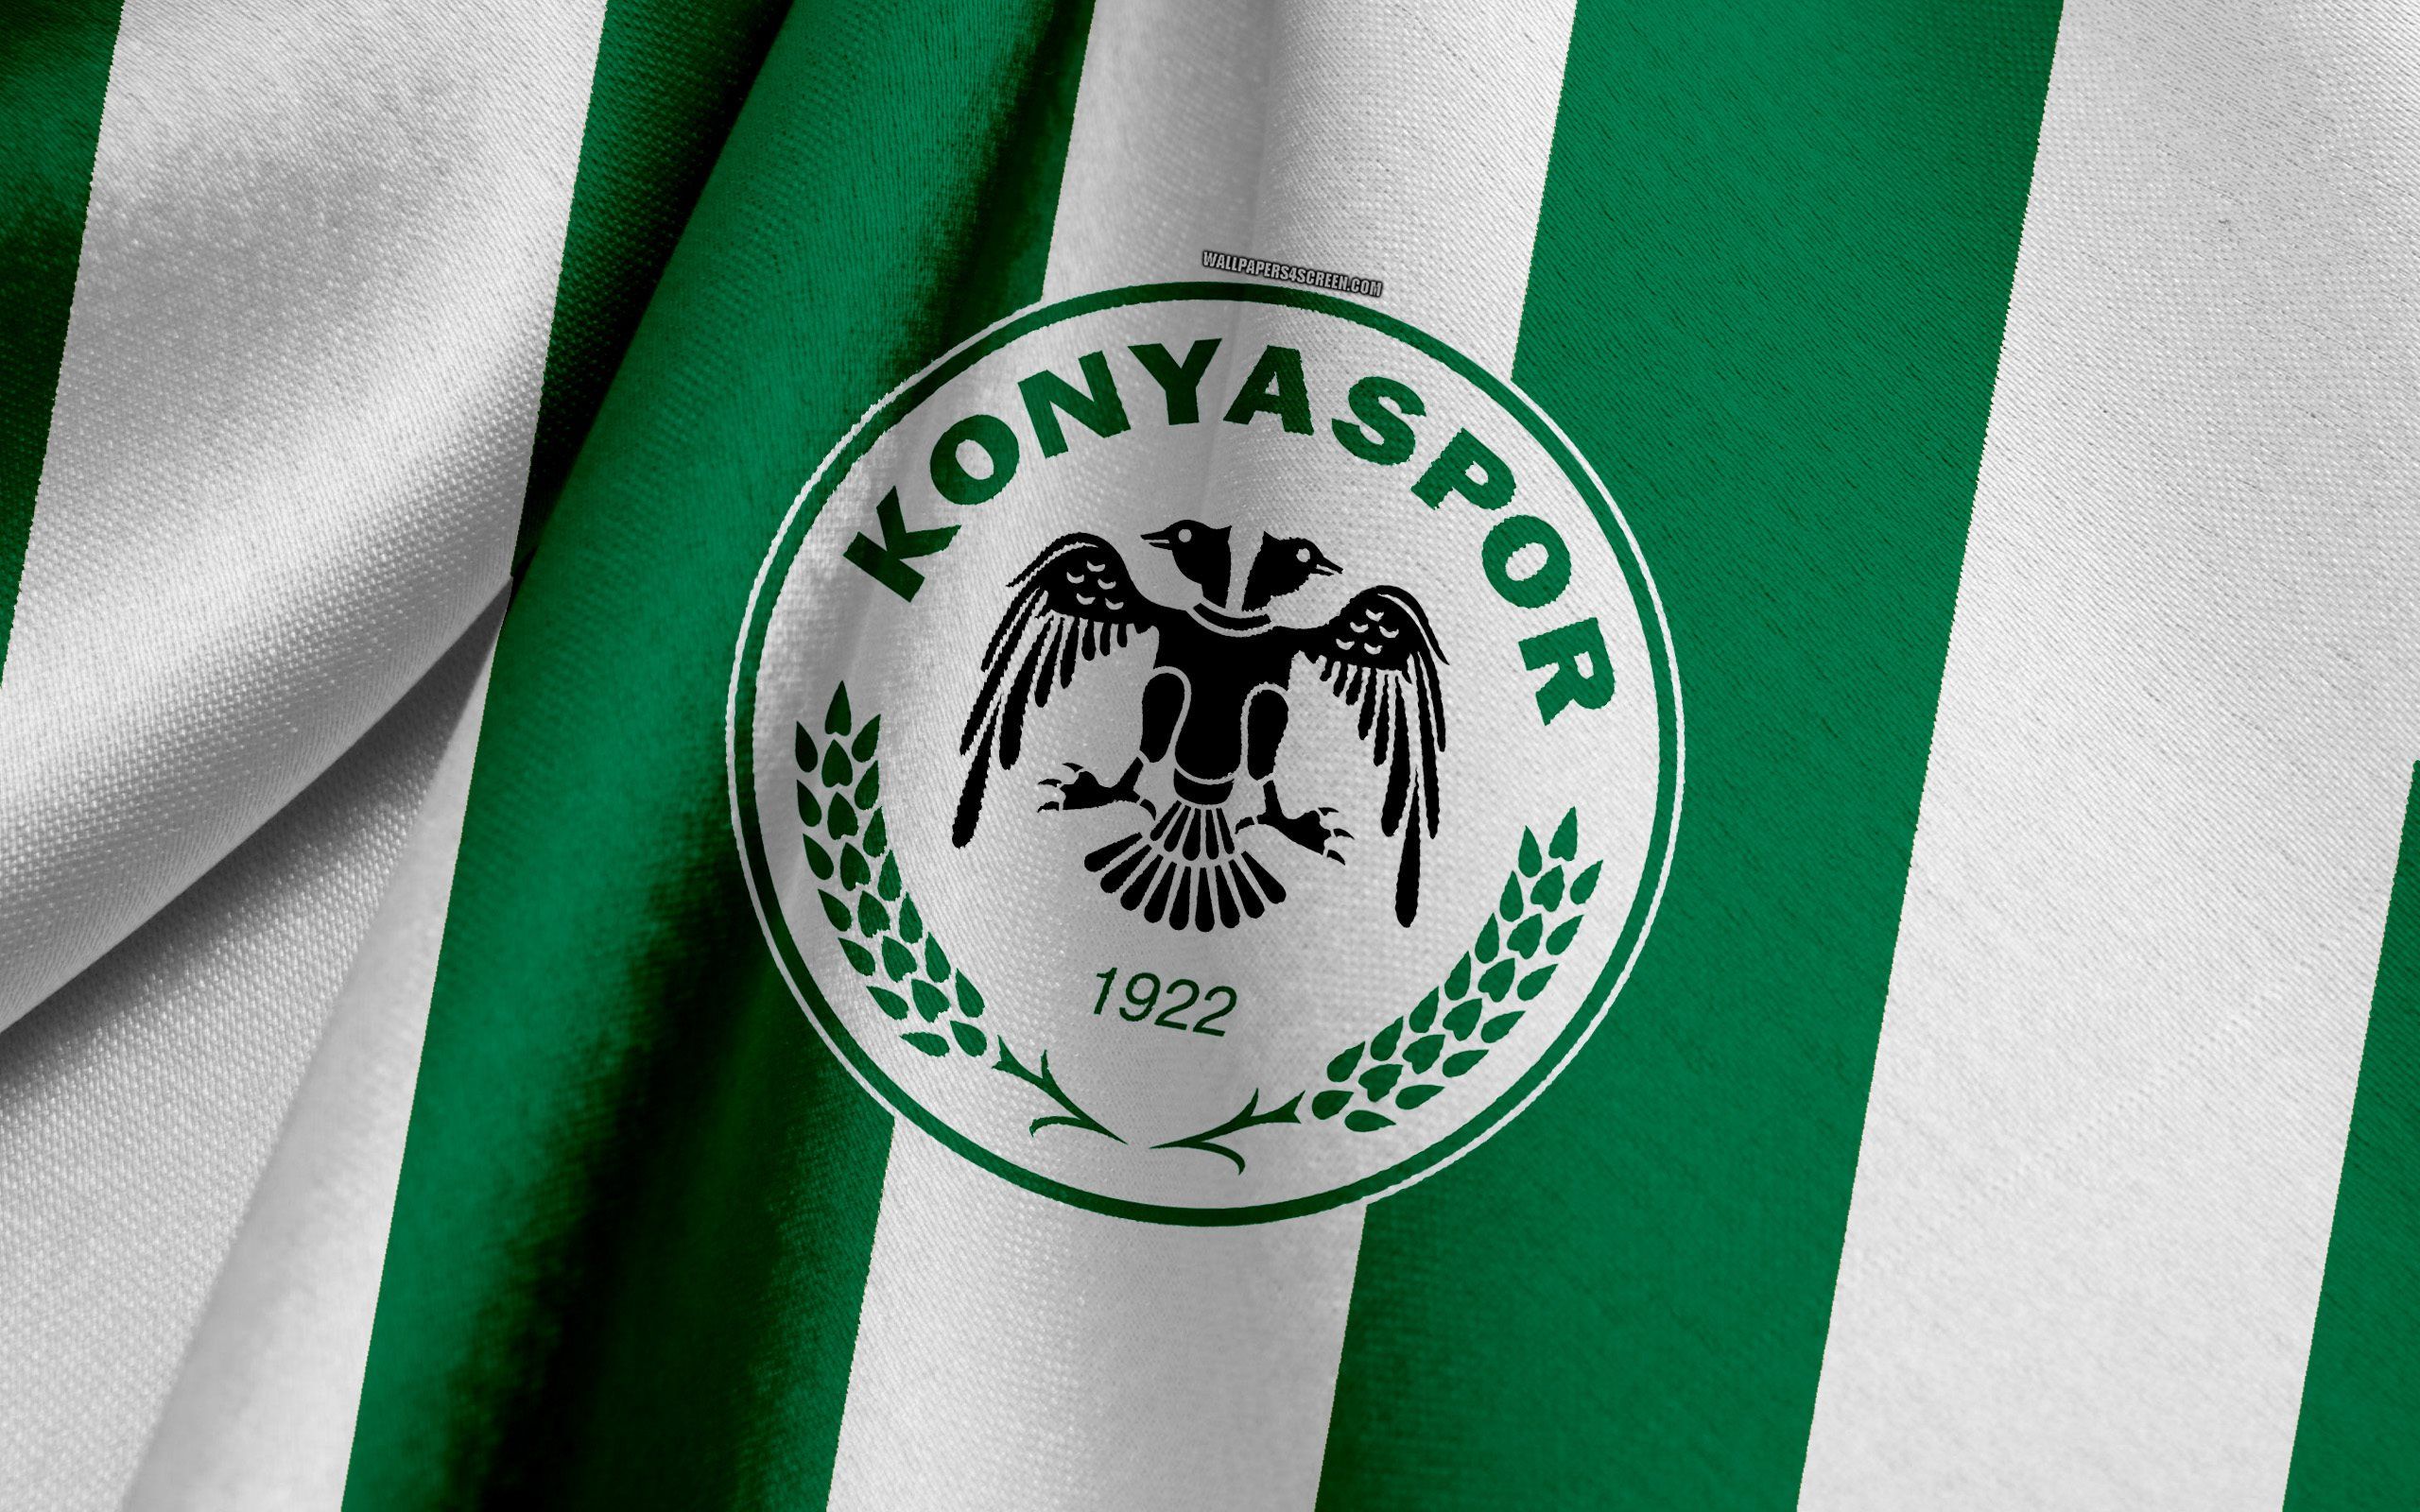 Download wallpaper Konyaspor, Turkish football team, green white flag, emblem, fabric texture, logo, Konya, Turkey for desktop with resolution 2560x1600. High Quality HD picture wallpaper